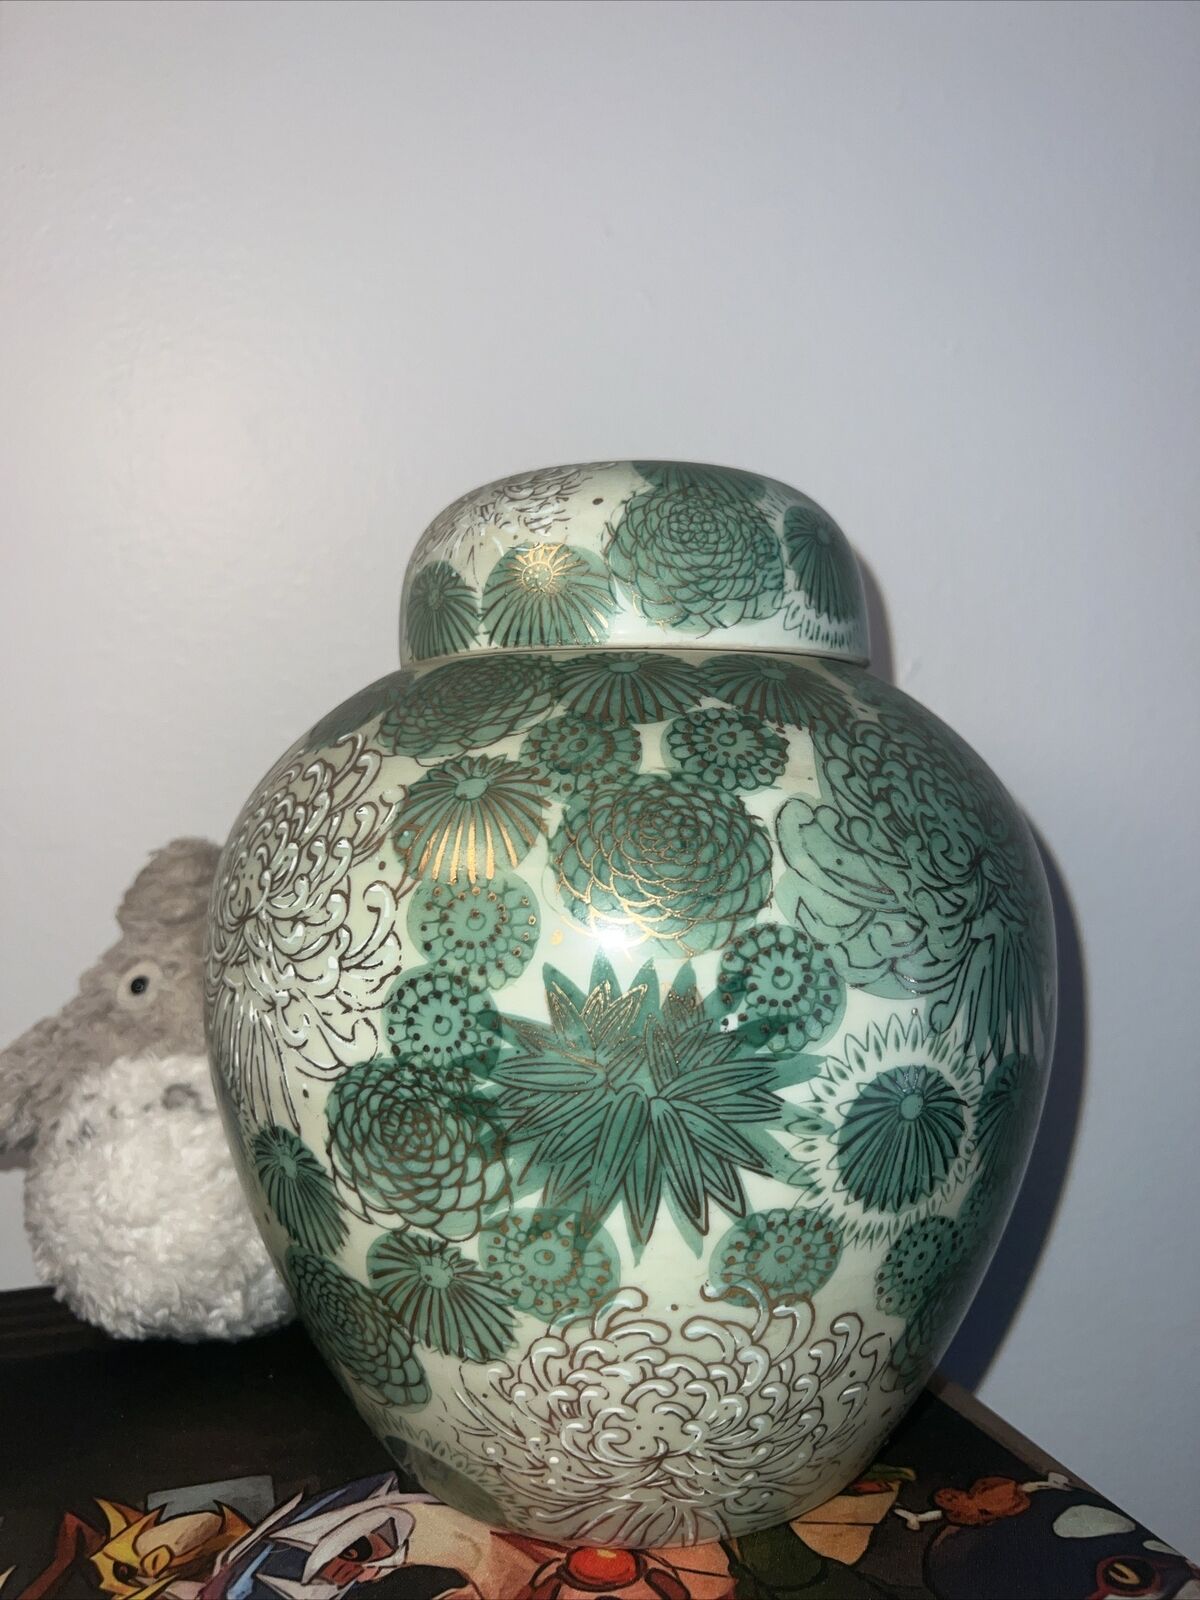 Beautiful Japanese Ginger Jar with Crysanthemum Motif.  Collector's Item Rare